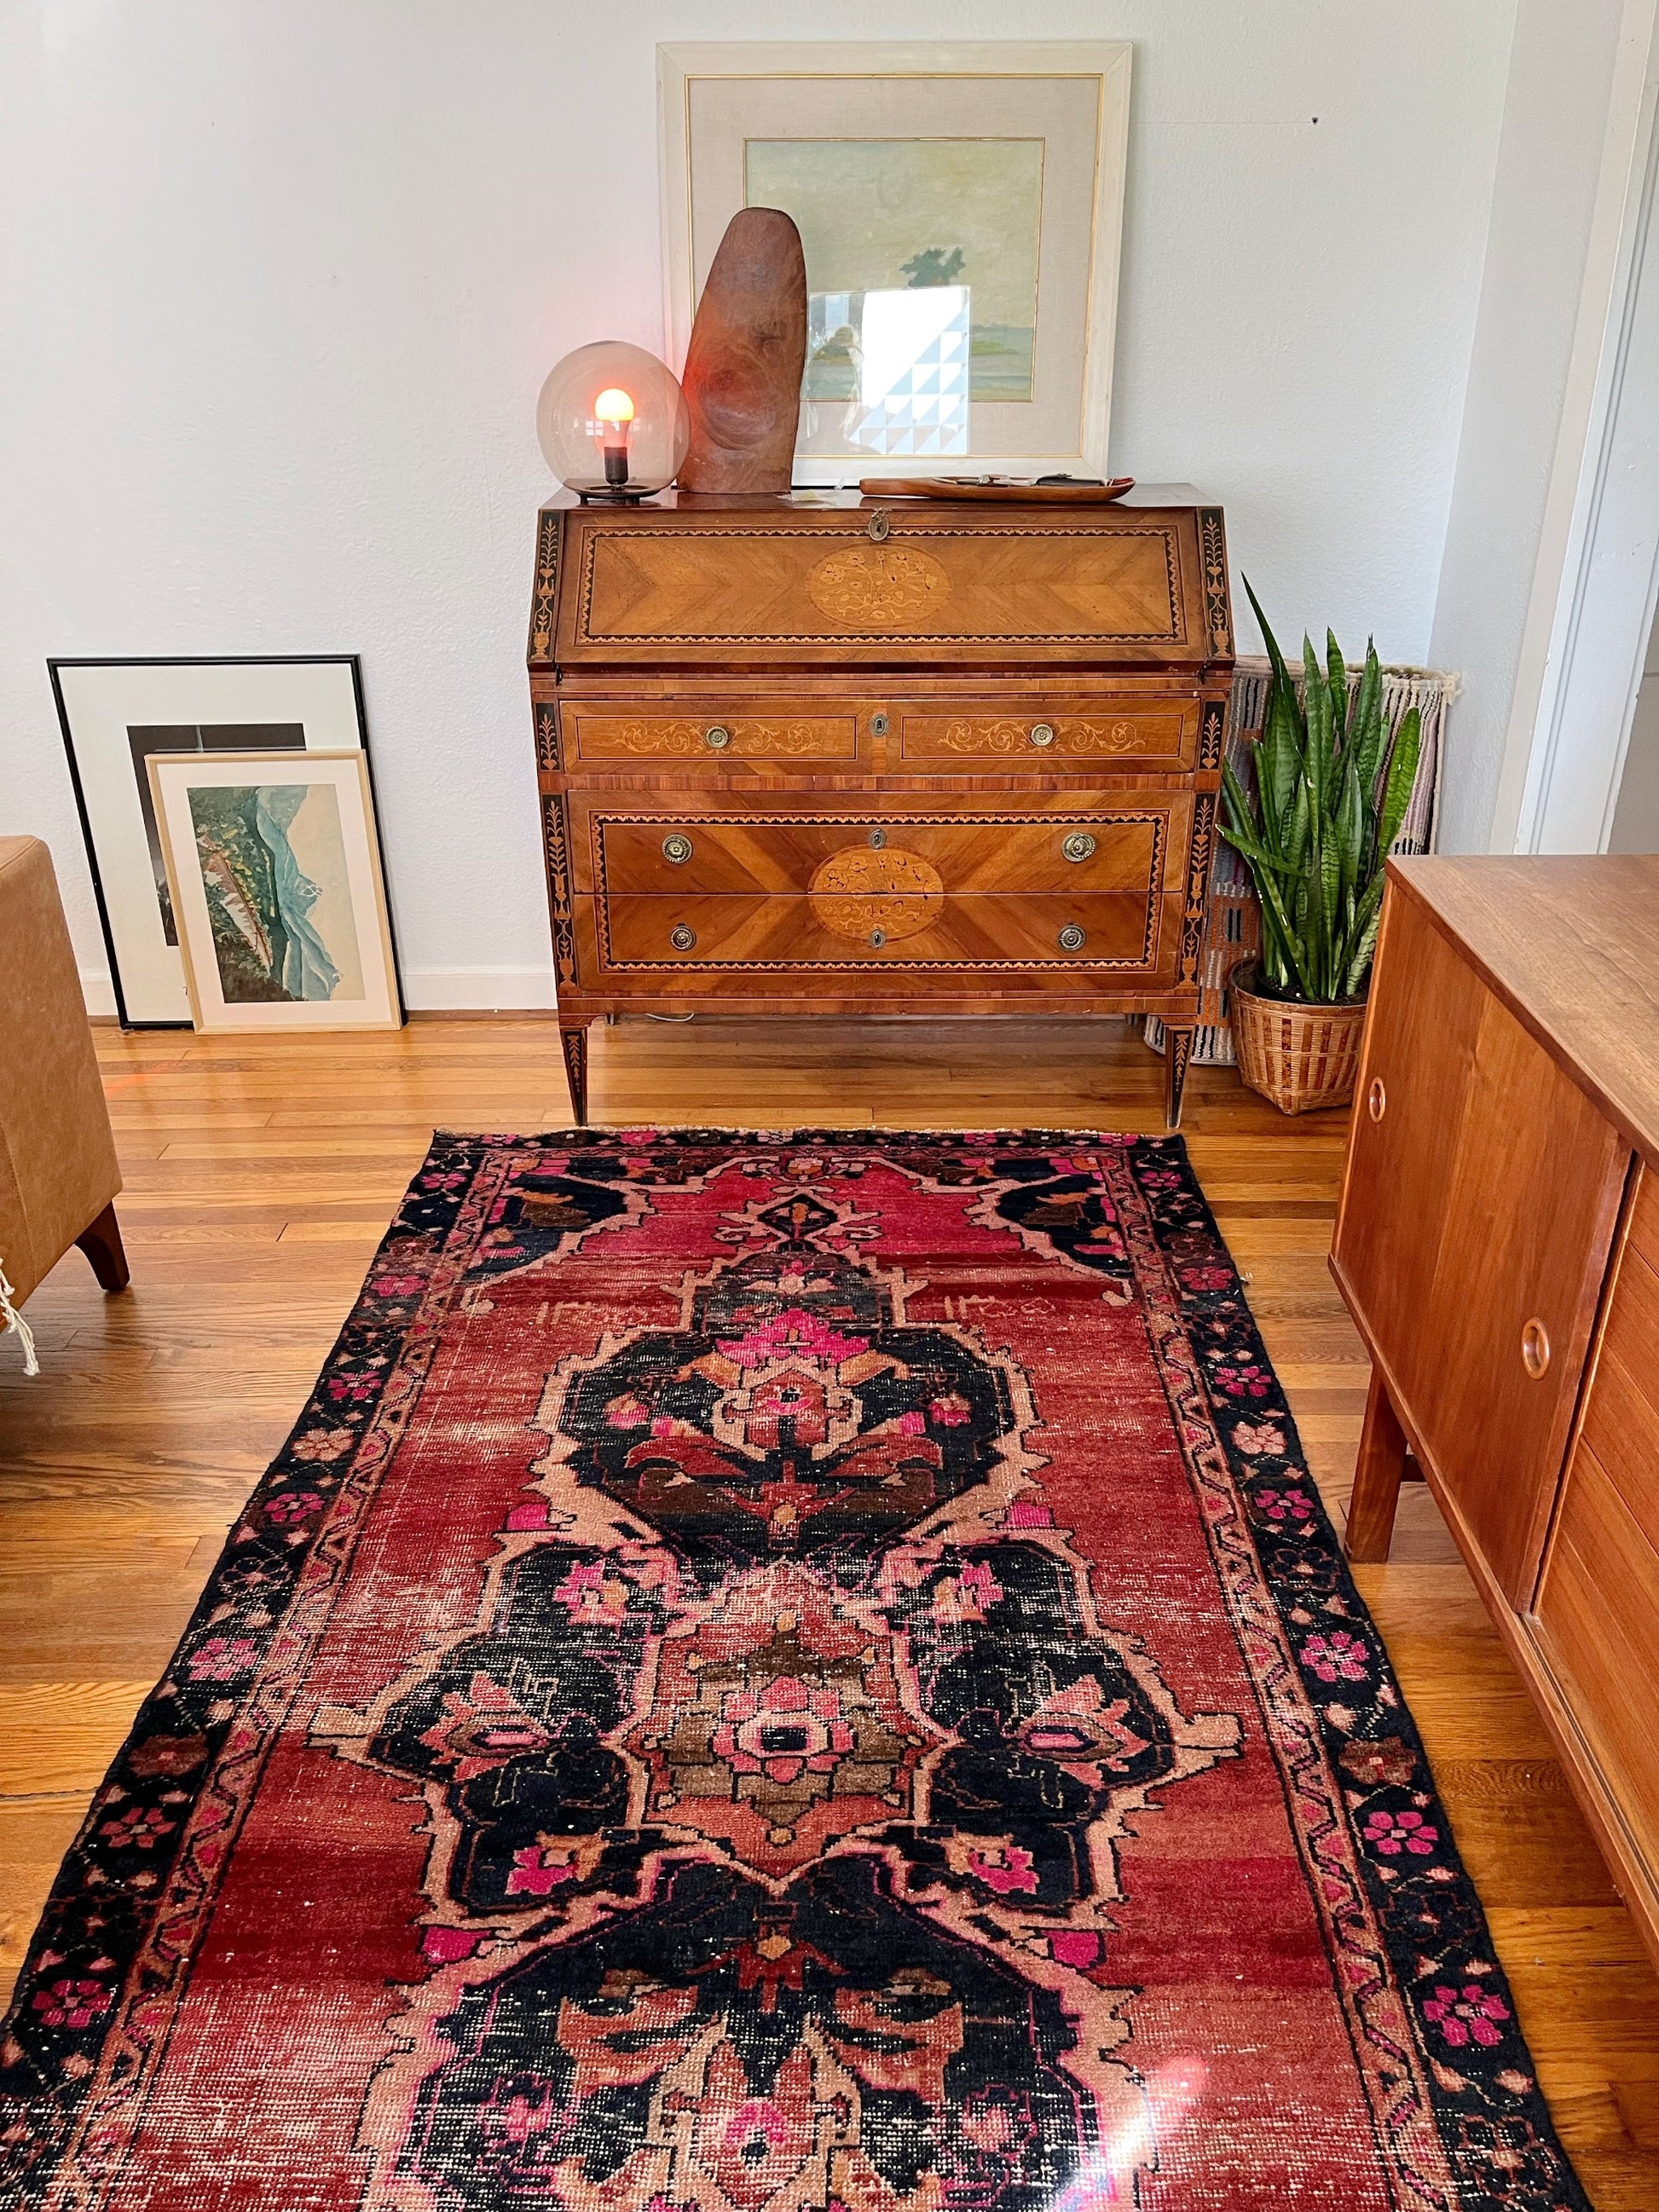 A cherished heirloom like the Lili Persian rug elegantly fits into any area